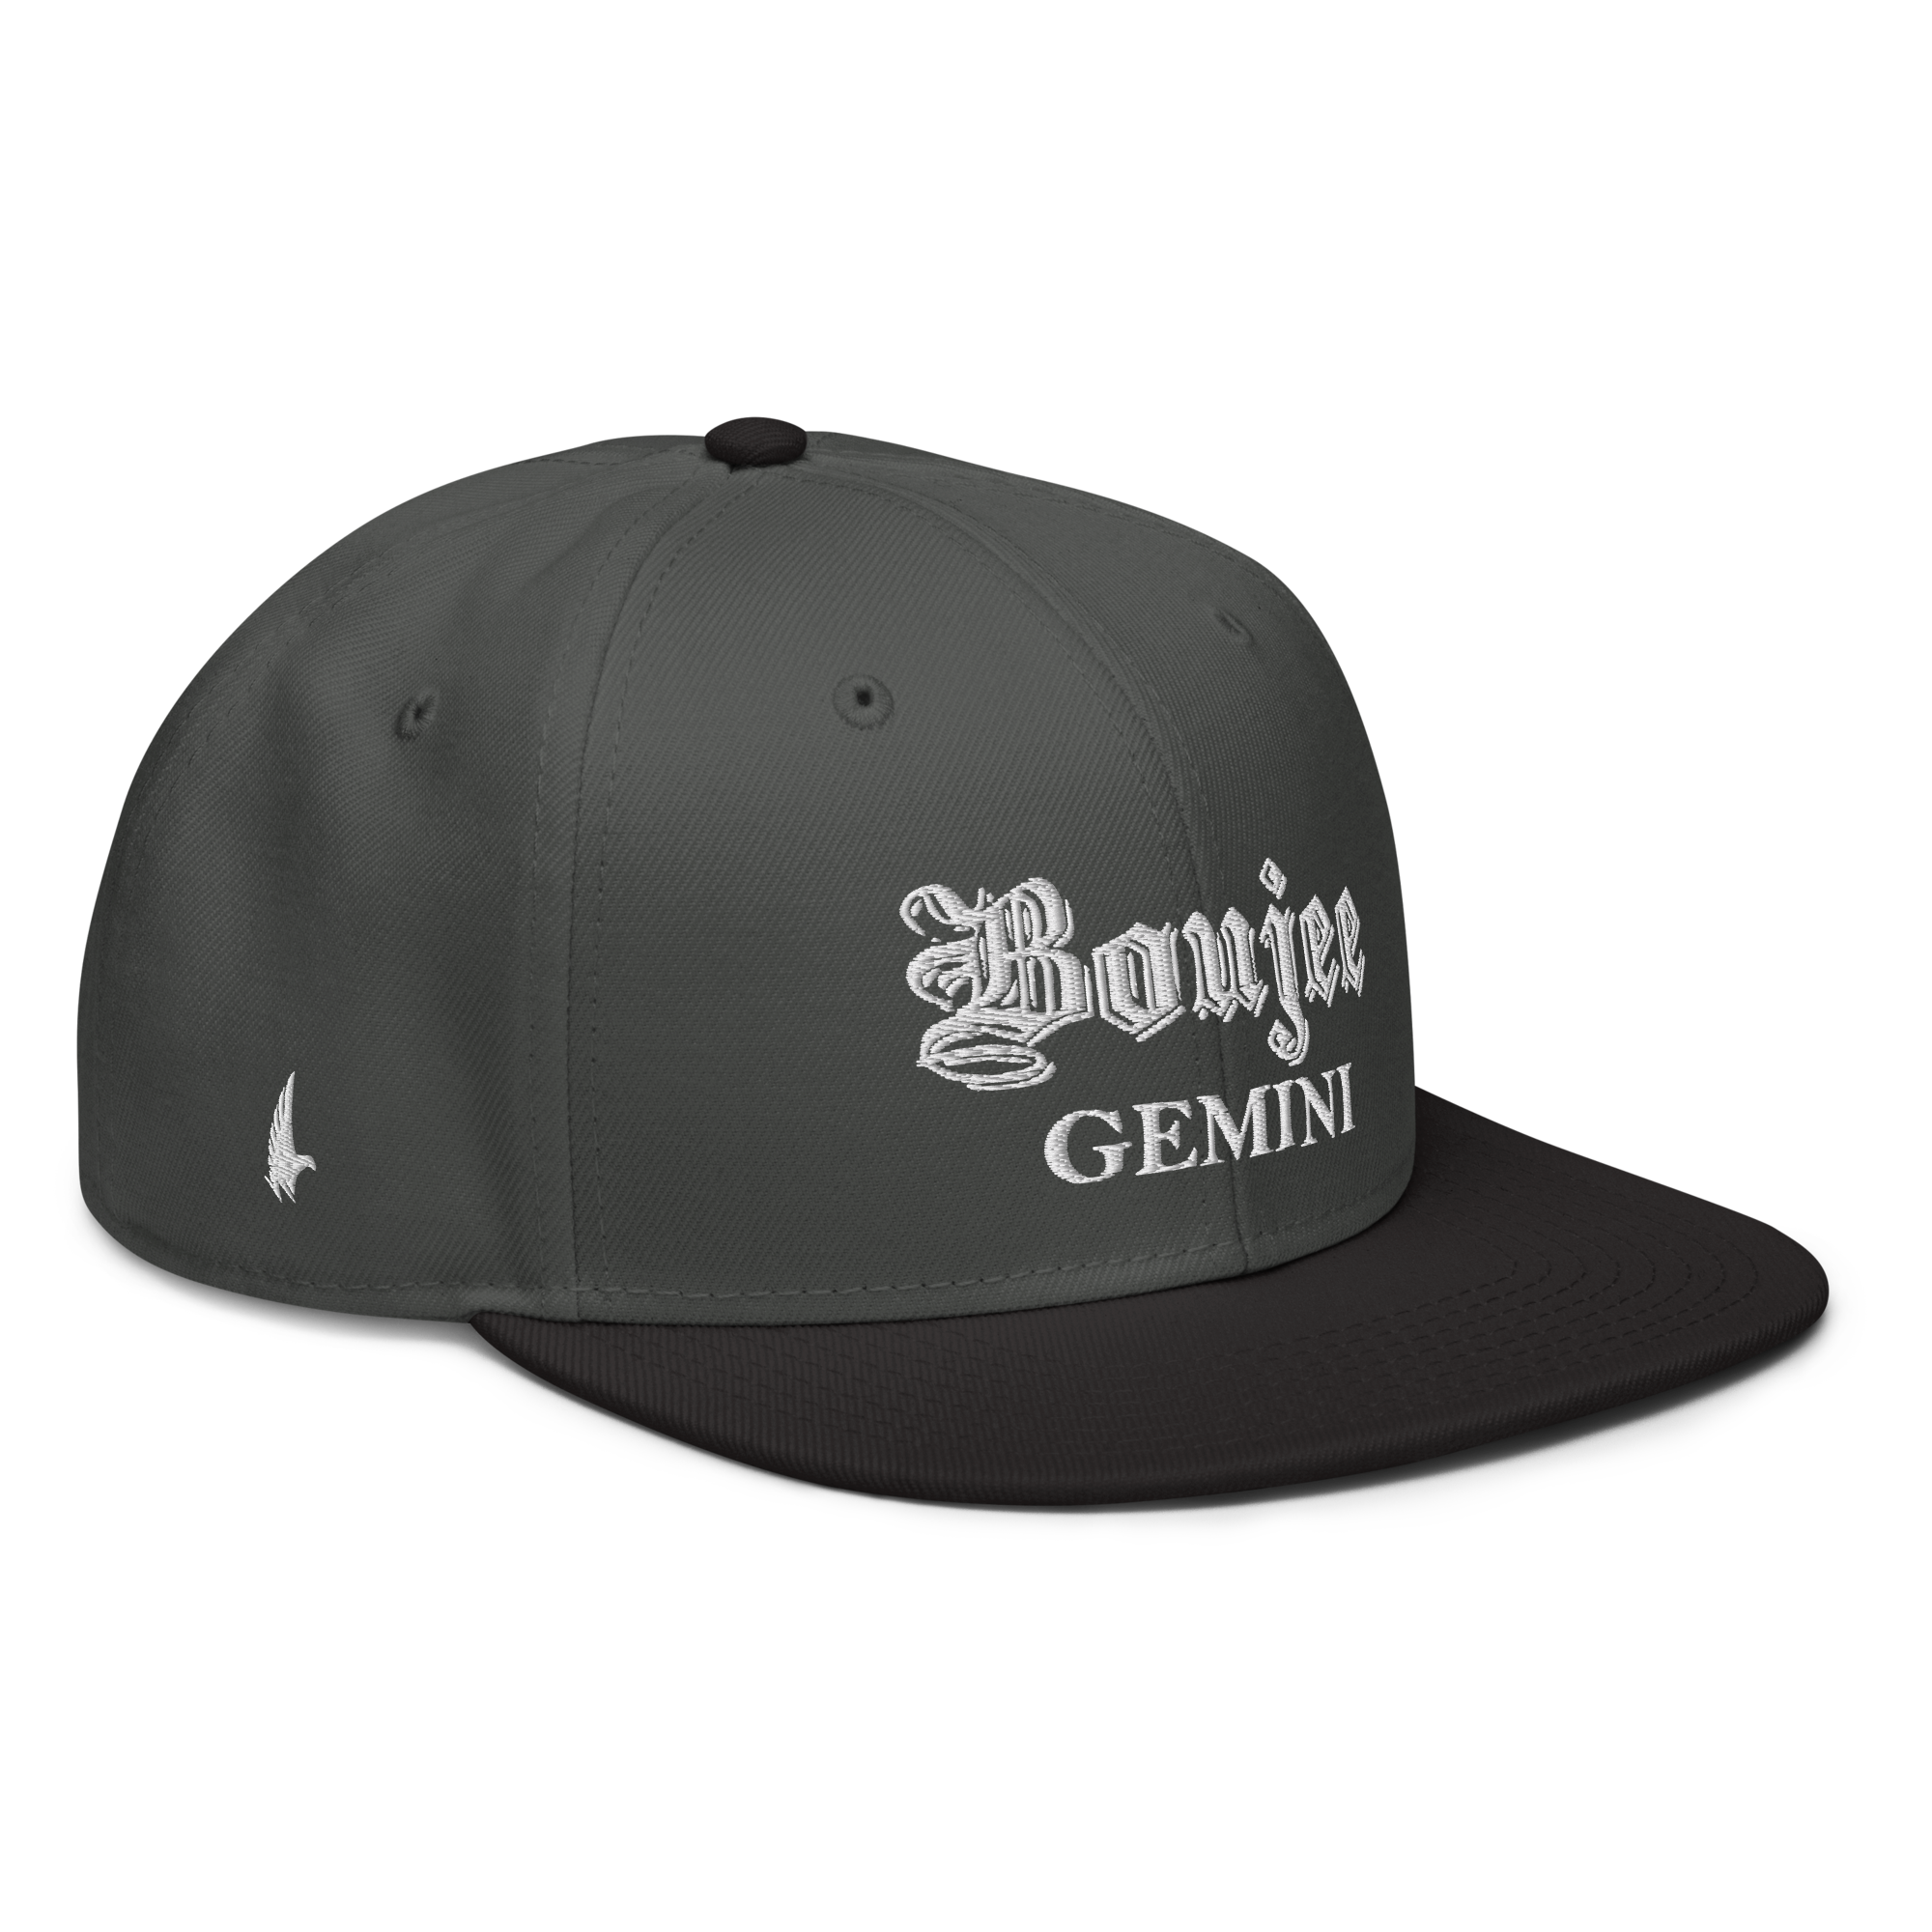 Boujee Gemini Snapback Hat - Charcoal Gray/White/Black - Loyalty Vibes